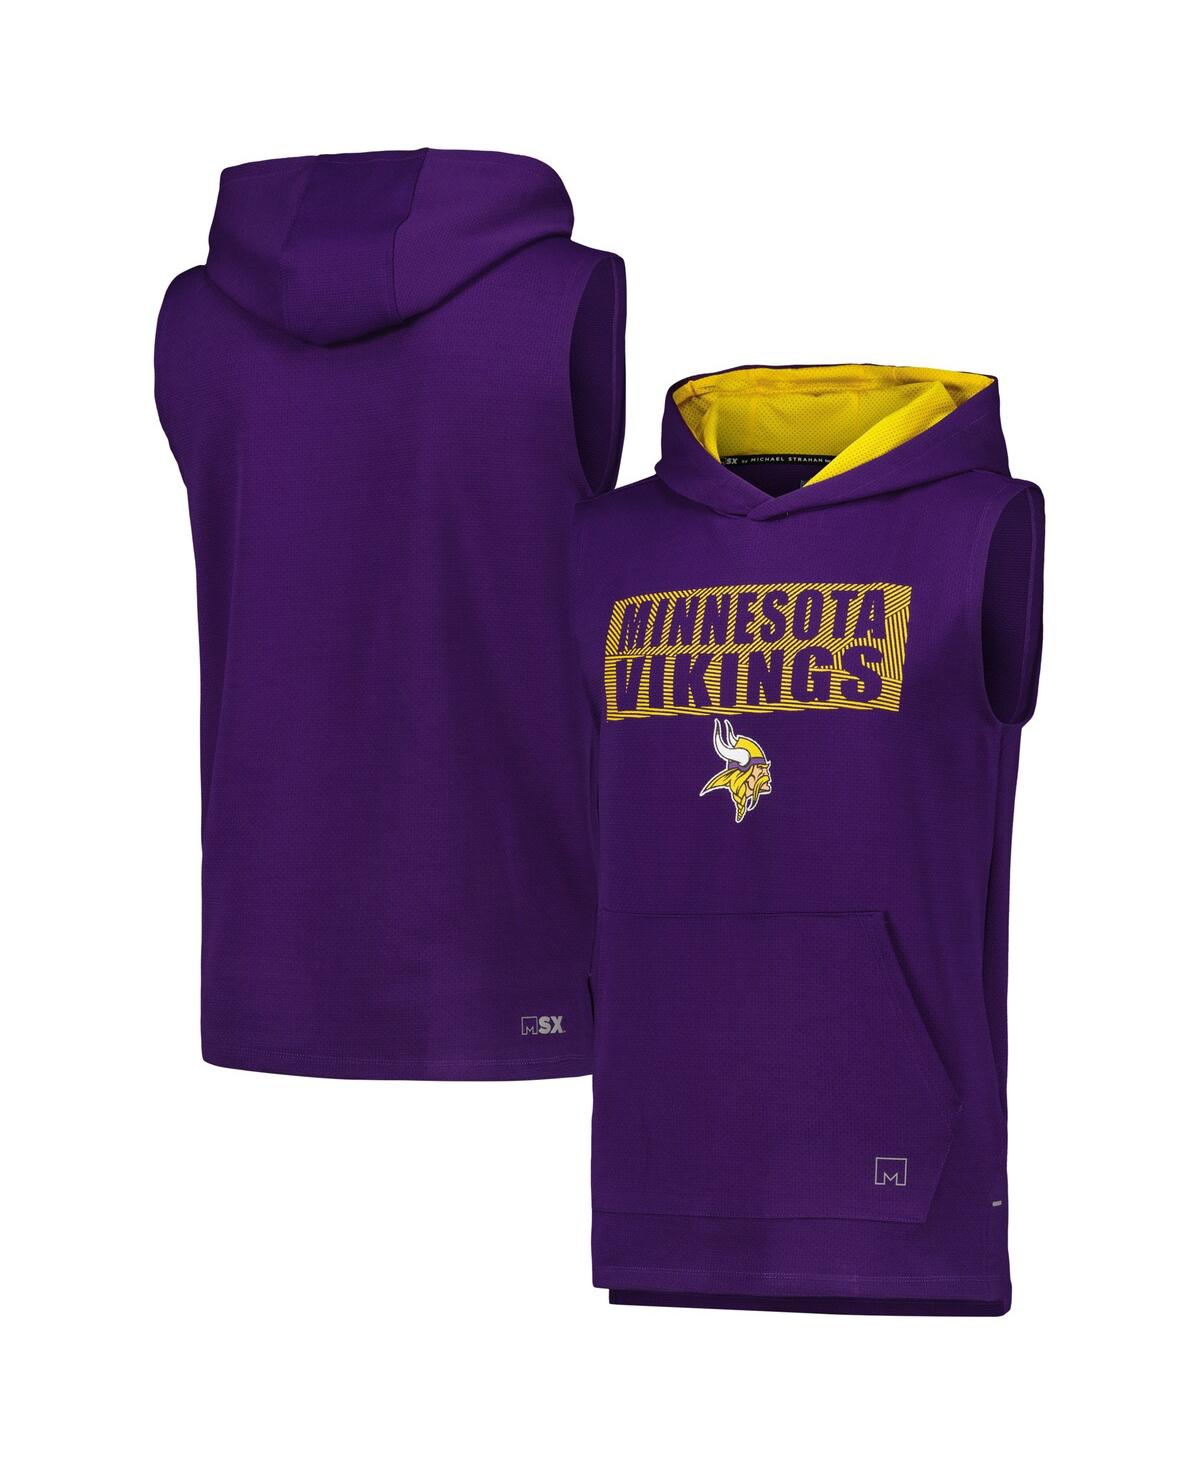 Men's Msx by Michael Strahan Purple Minnesota Vikings Marathon Sleeveless Pullover Hoodie - Purple